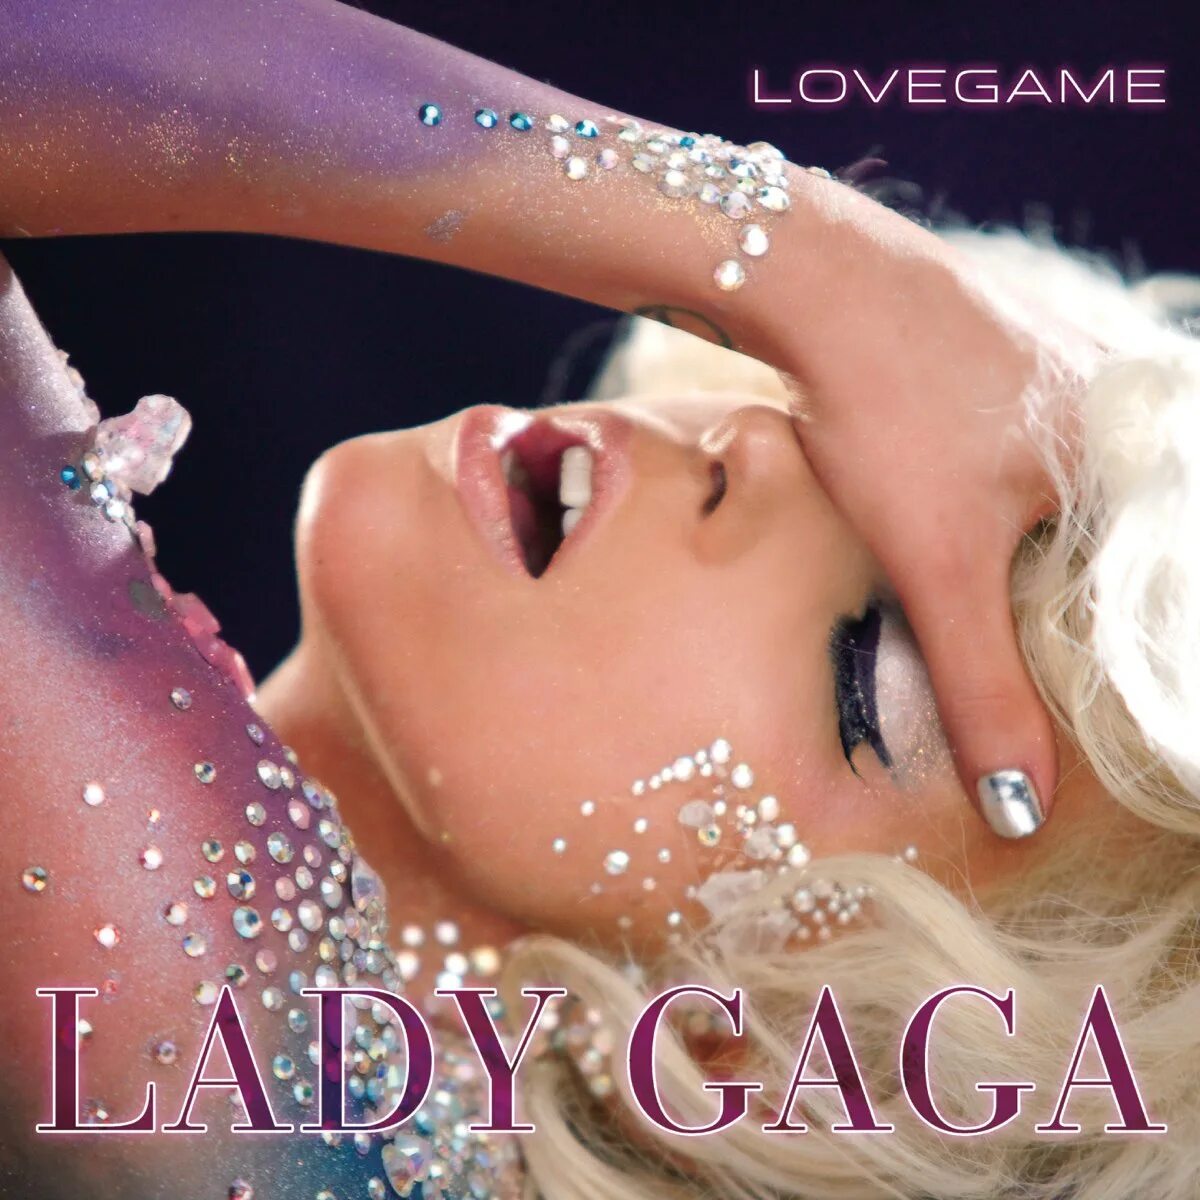 Lady Gaga LOVEGAME обложка. LOVEGAME леди Гага. Lady Gaga Love game. LOVEGAME Lady Gaga альбом.